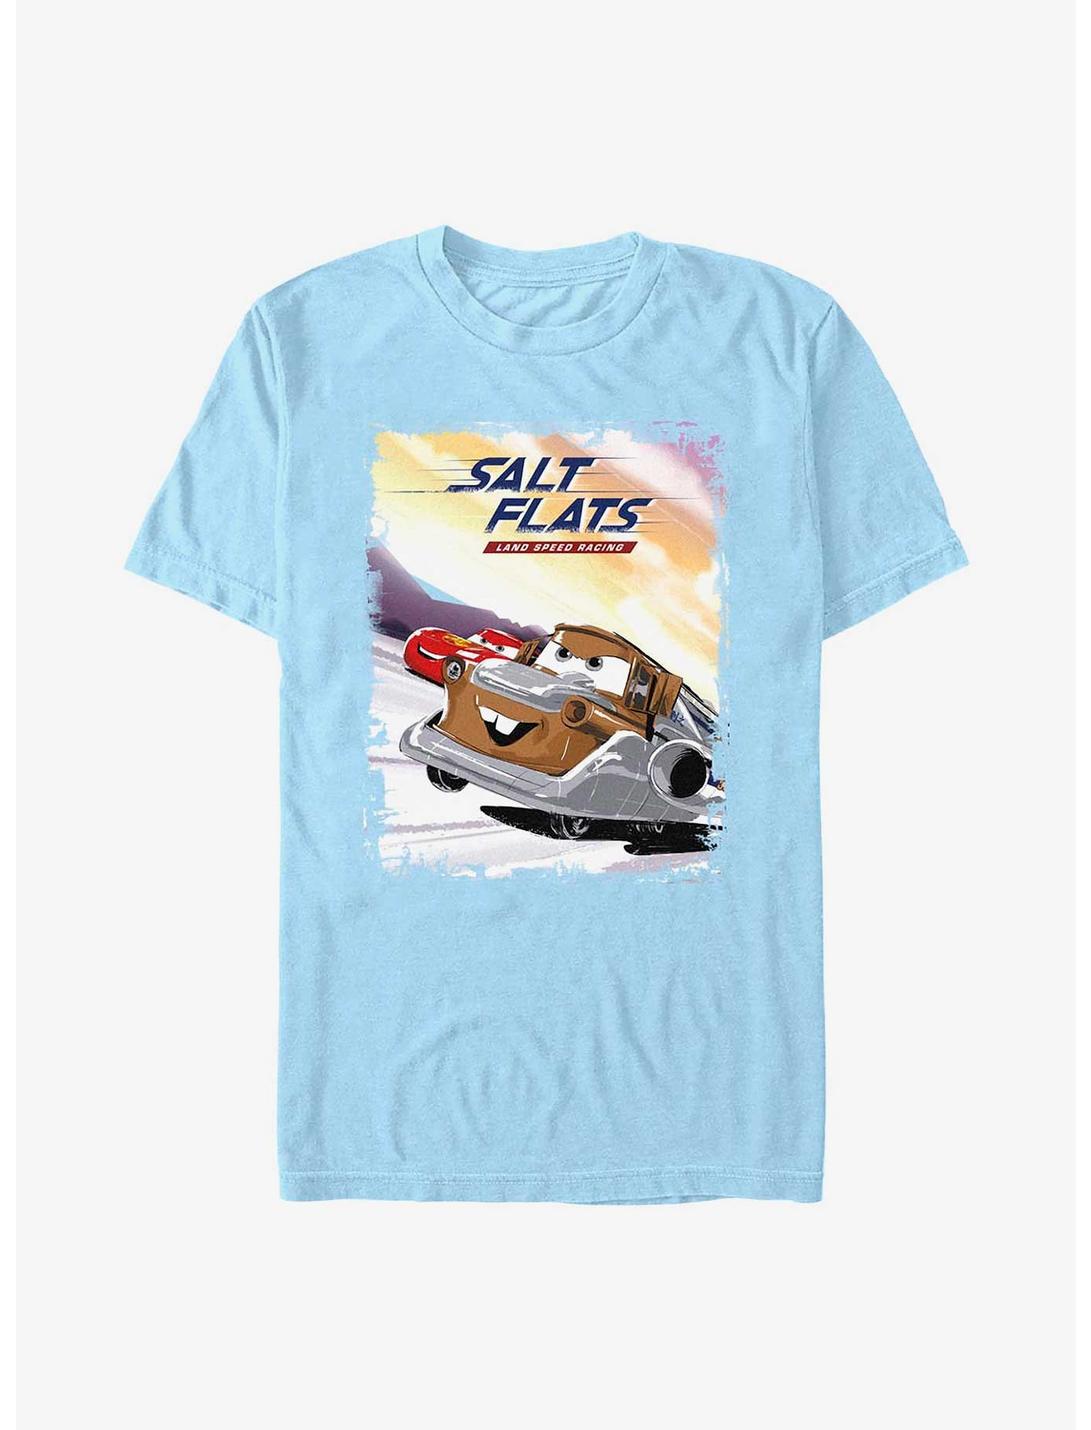 Disney Pixar Cars Salt Flats Land Speed Racing T-Shirt, LT BLUE, hi-res